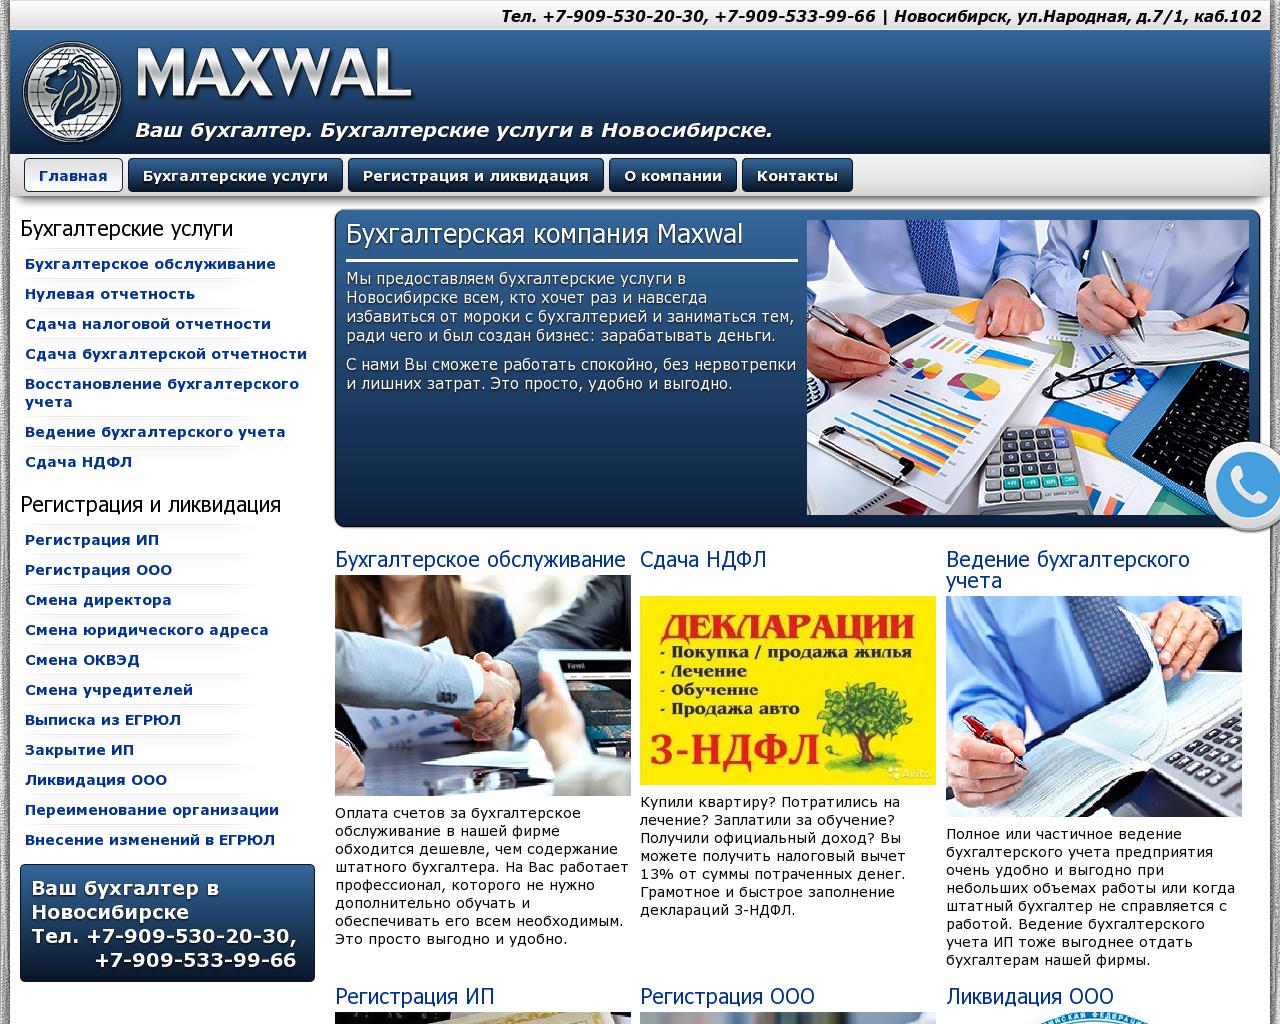 Изображение сайта maxwal.ru в разрешении 1280x1024